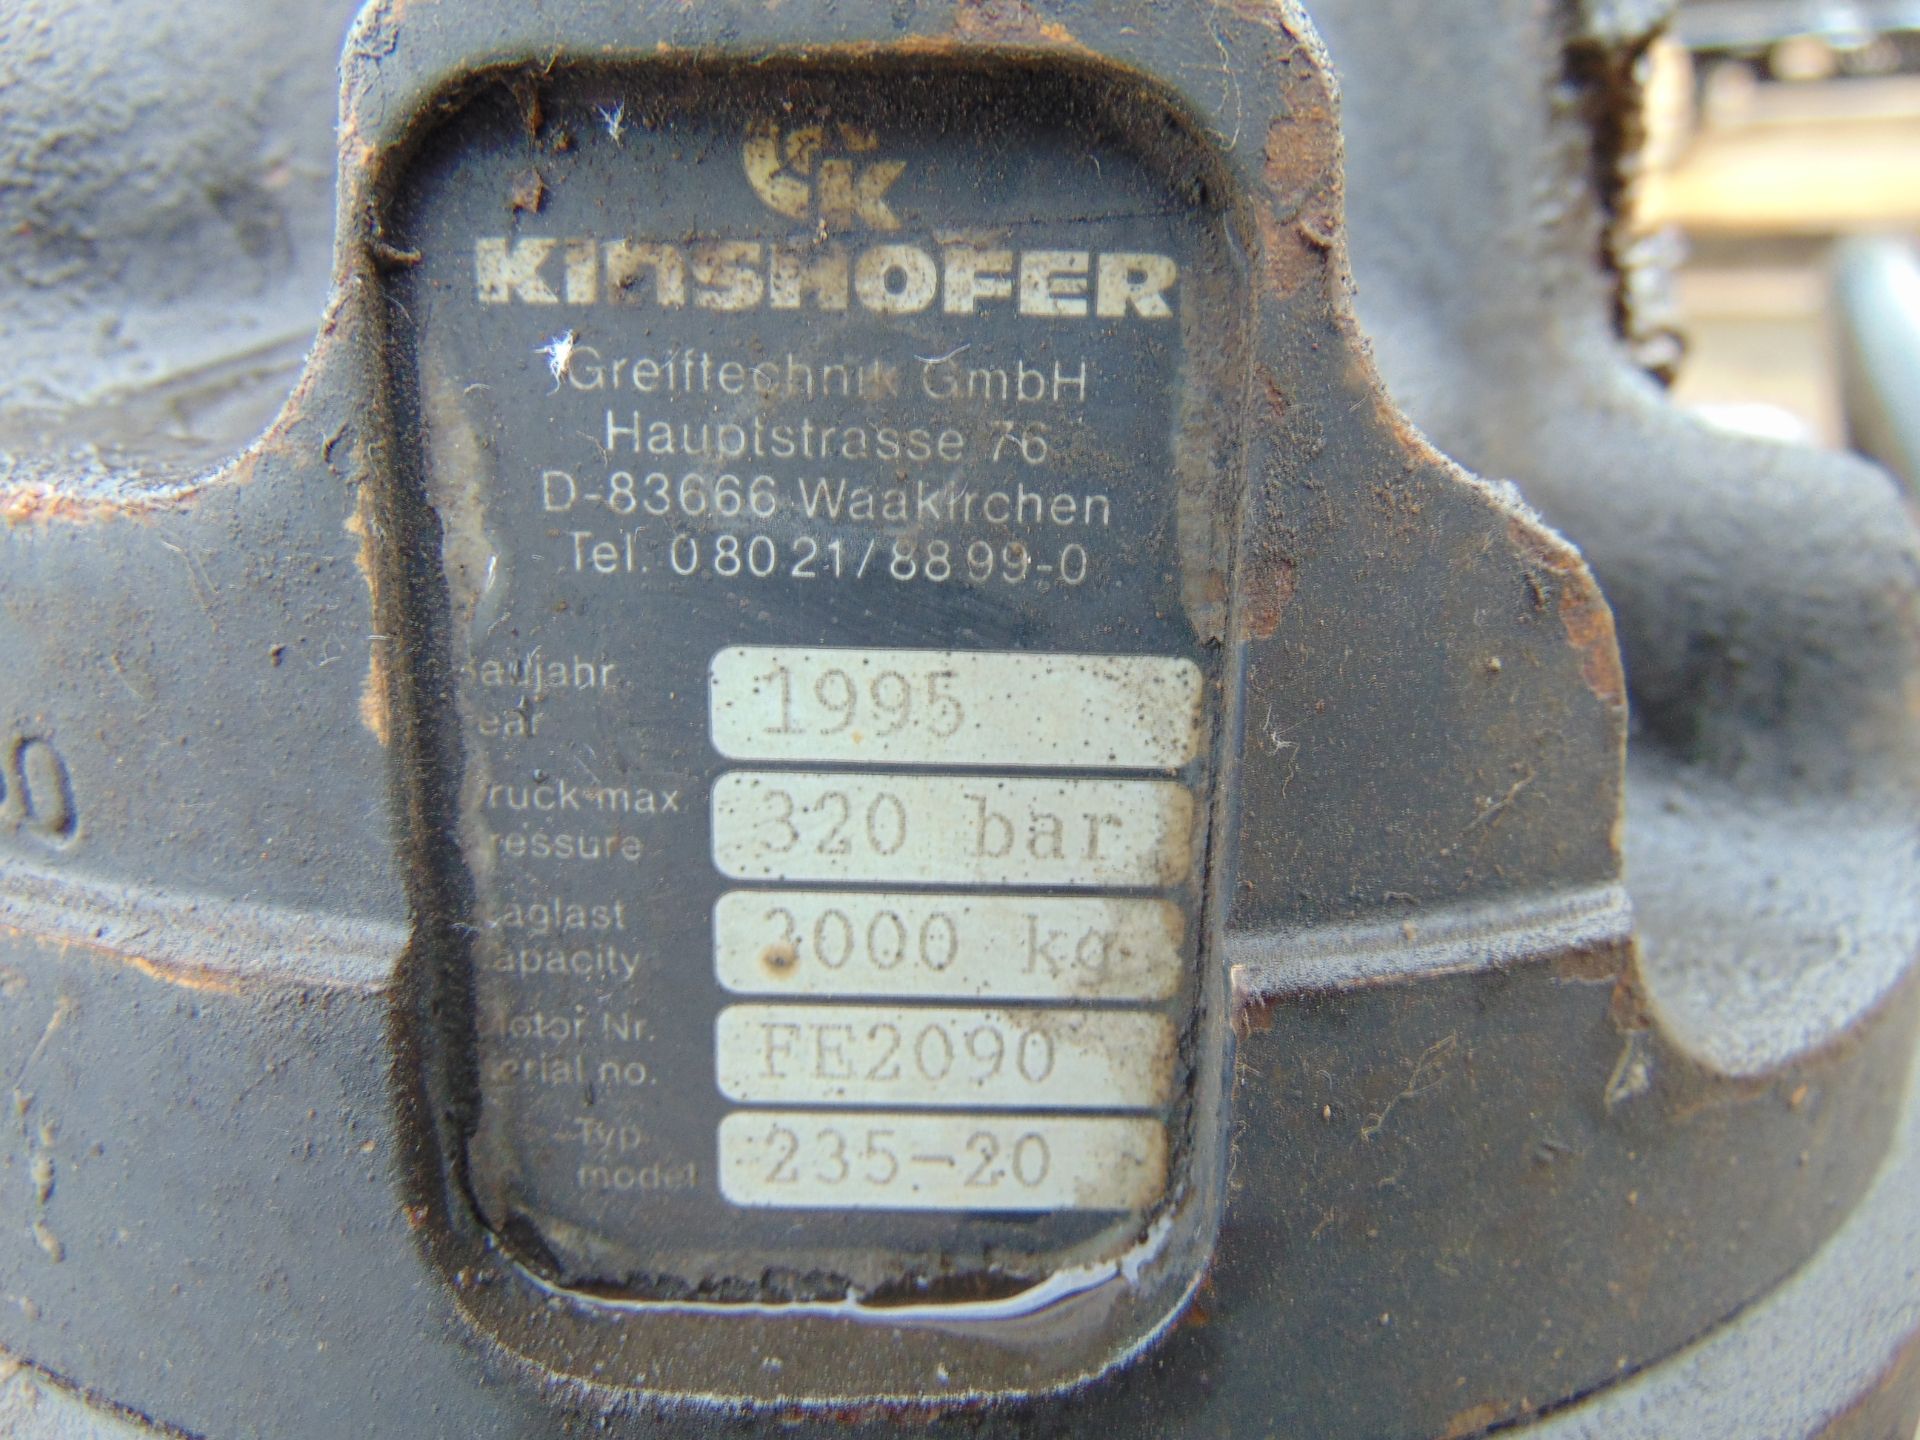 Kinshoffer 235-20 3000kg Clamshell bucket - Image 8 of 8